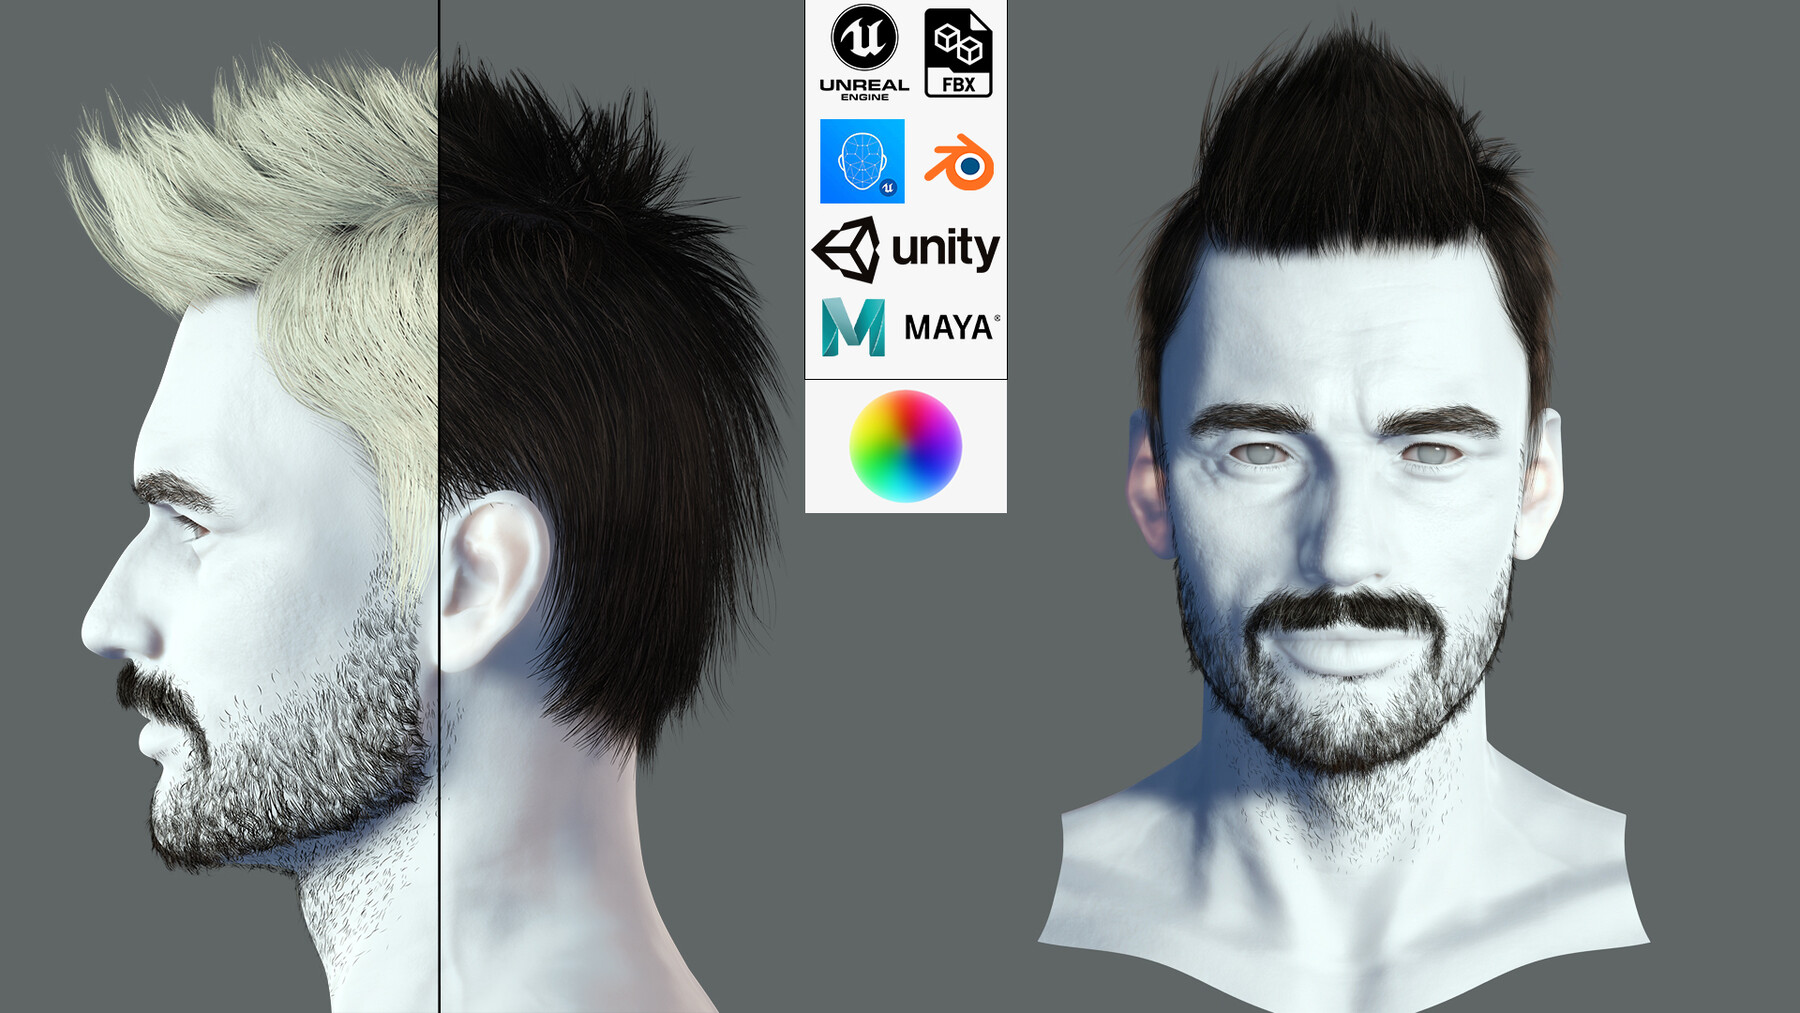 Final Fantasy 14 Announces Hairstyle Design Contest